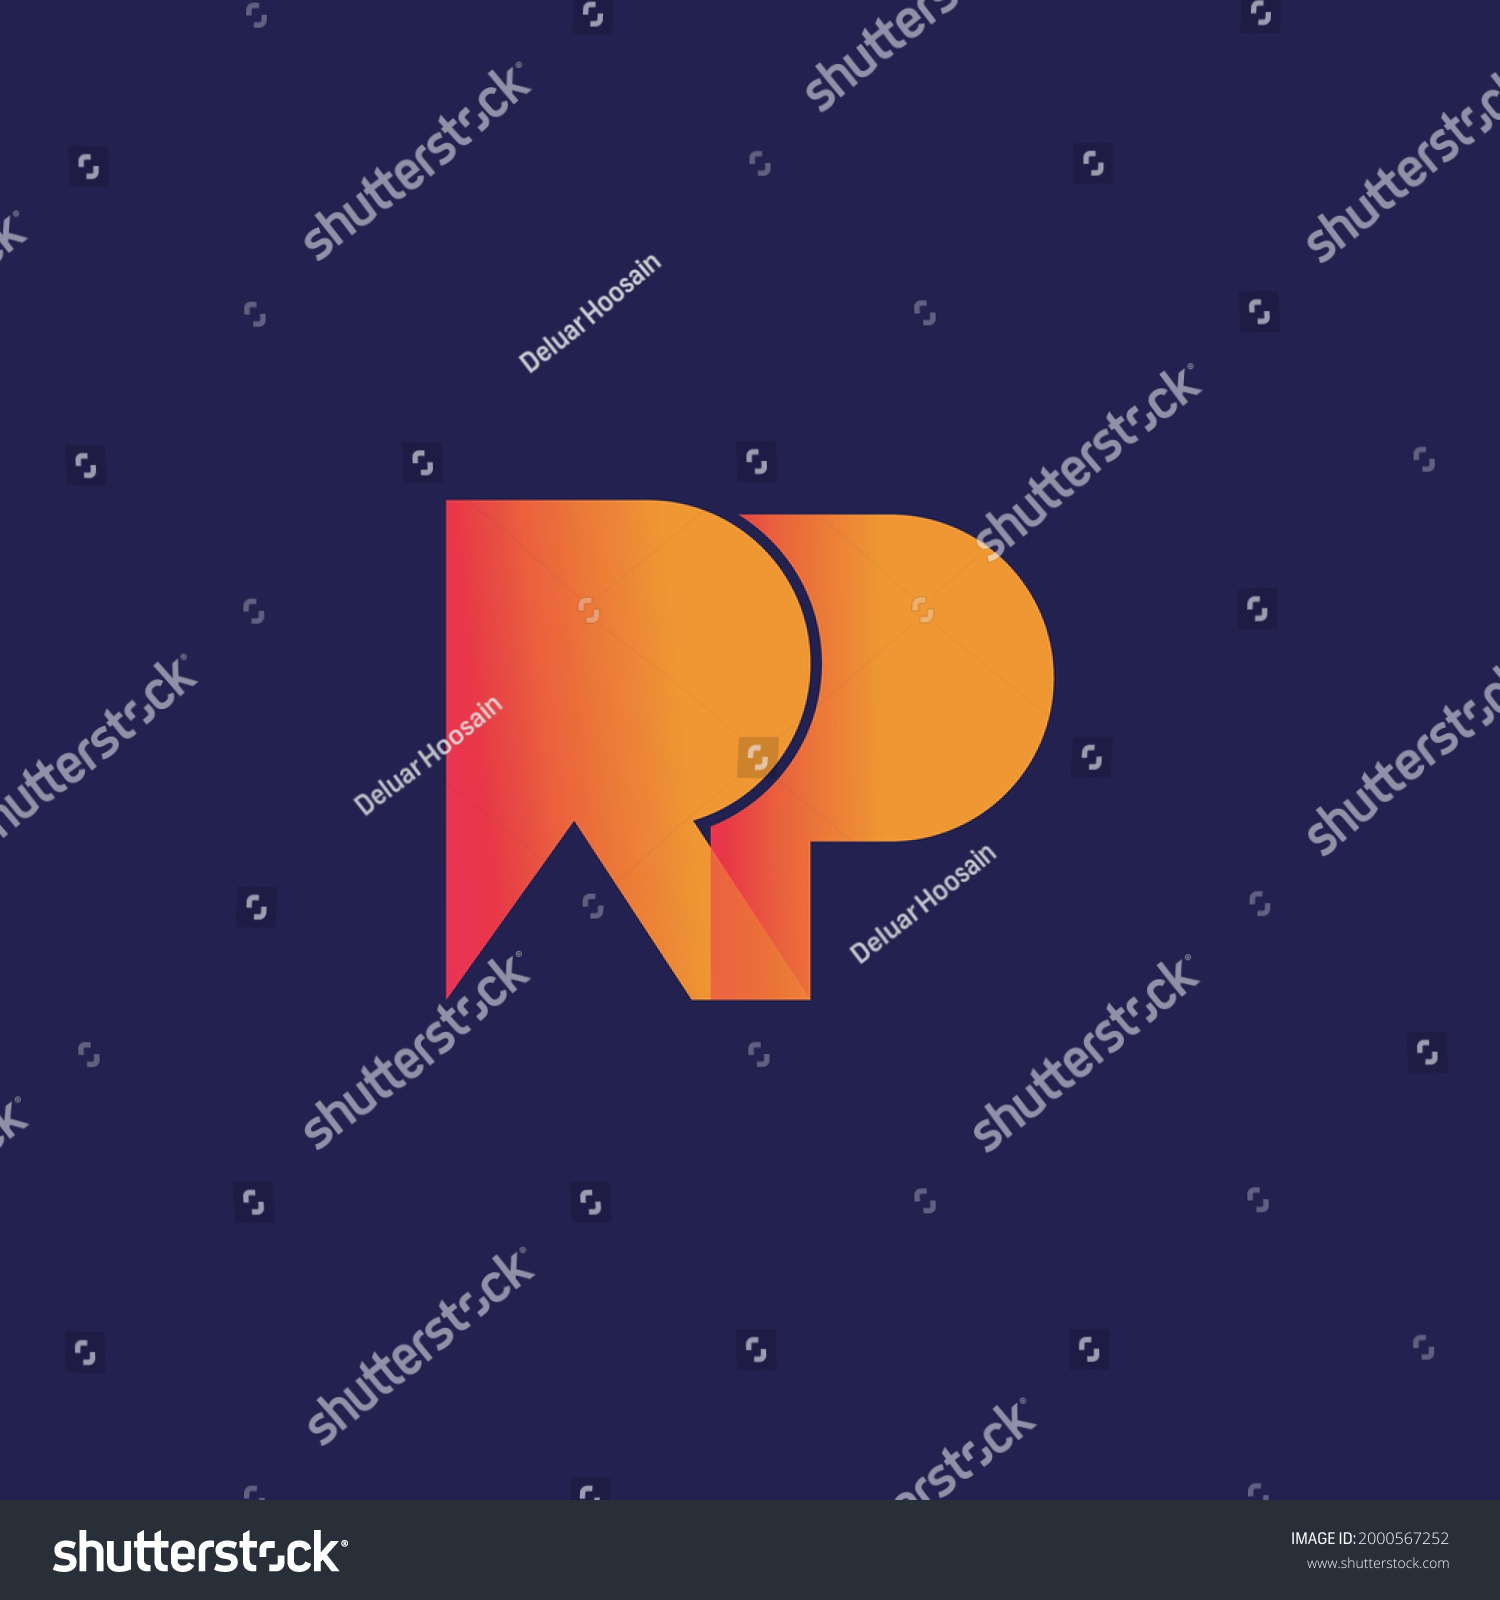 SVG of RP modern colorful original logo design with full copyright svg